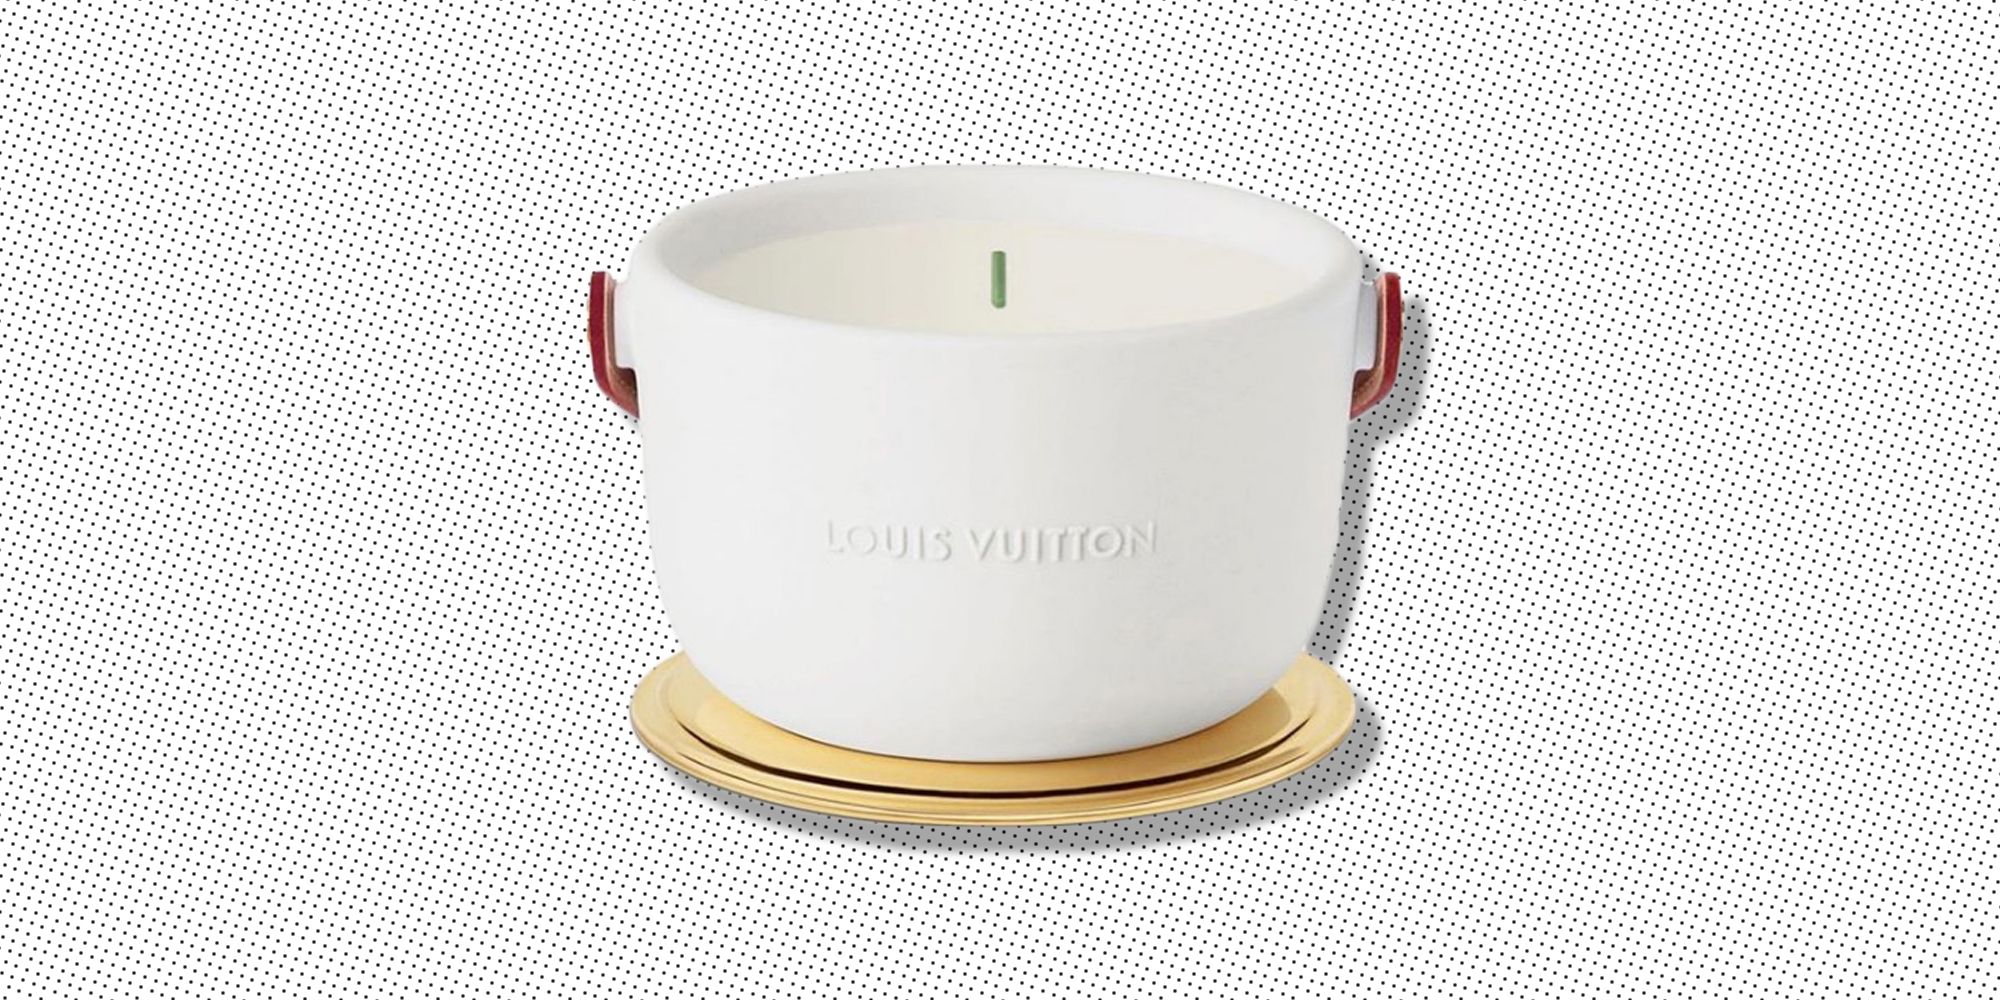 Louis Vuitton Candle -  UK